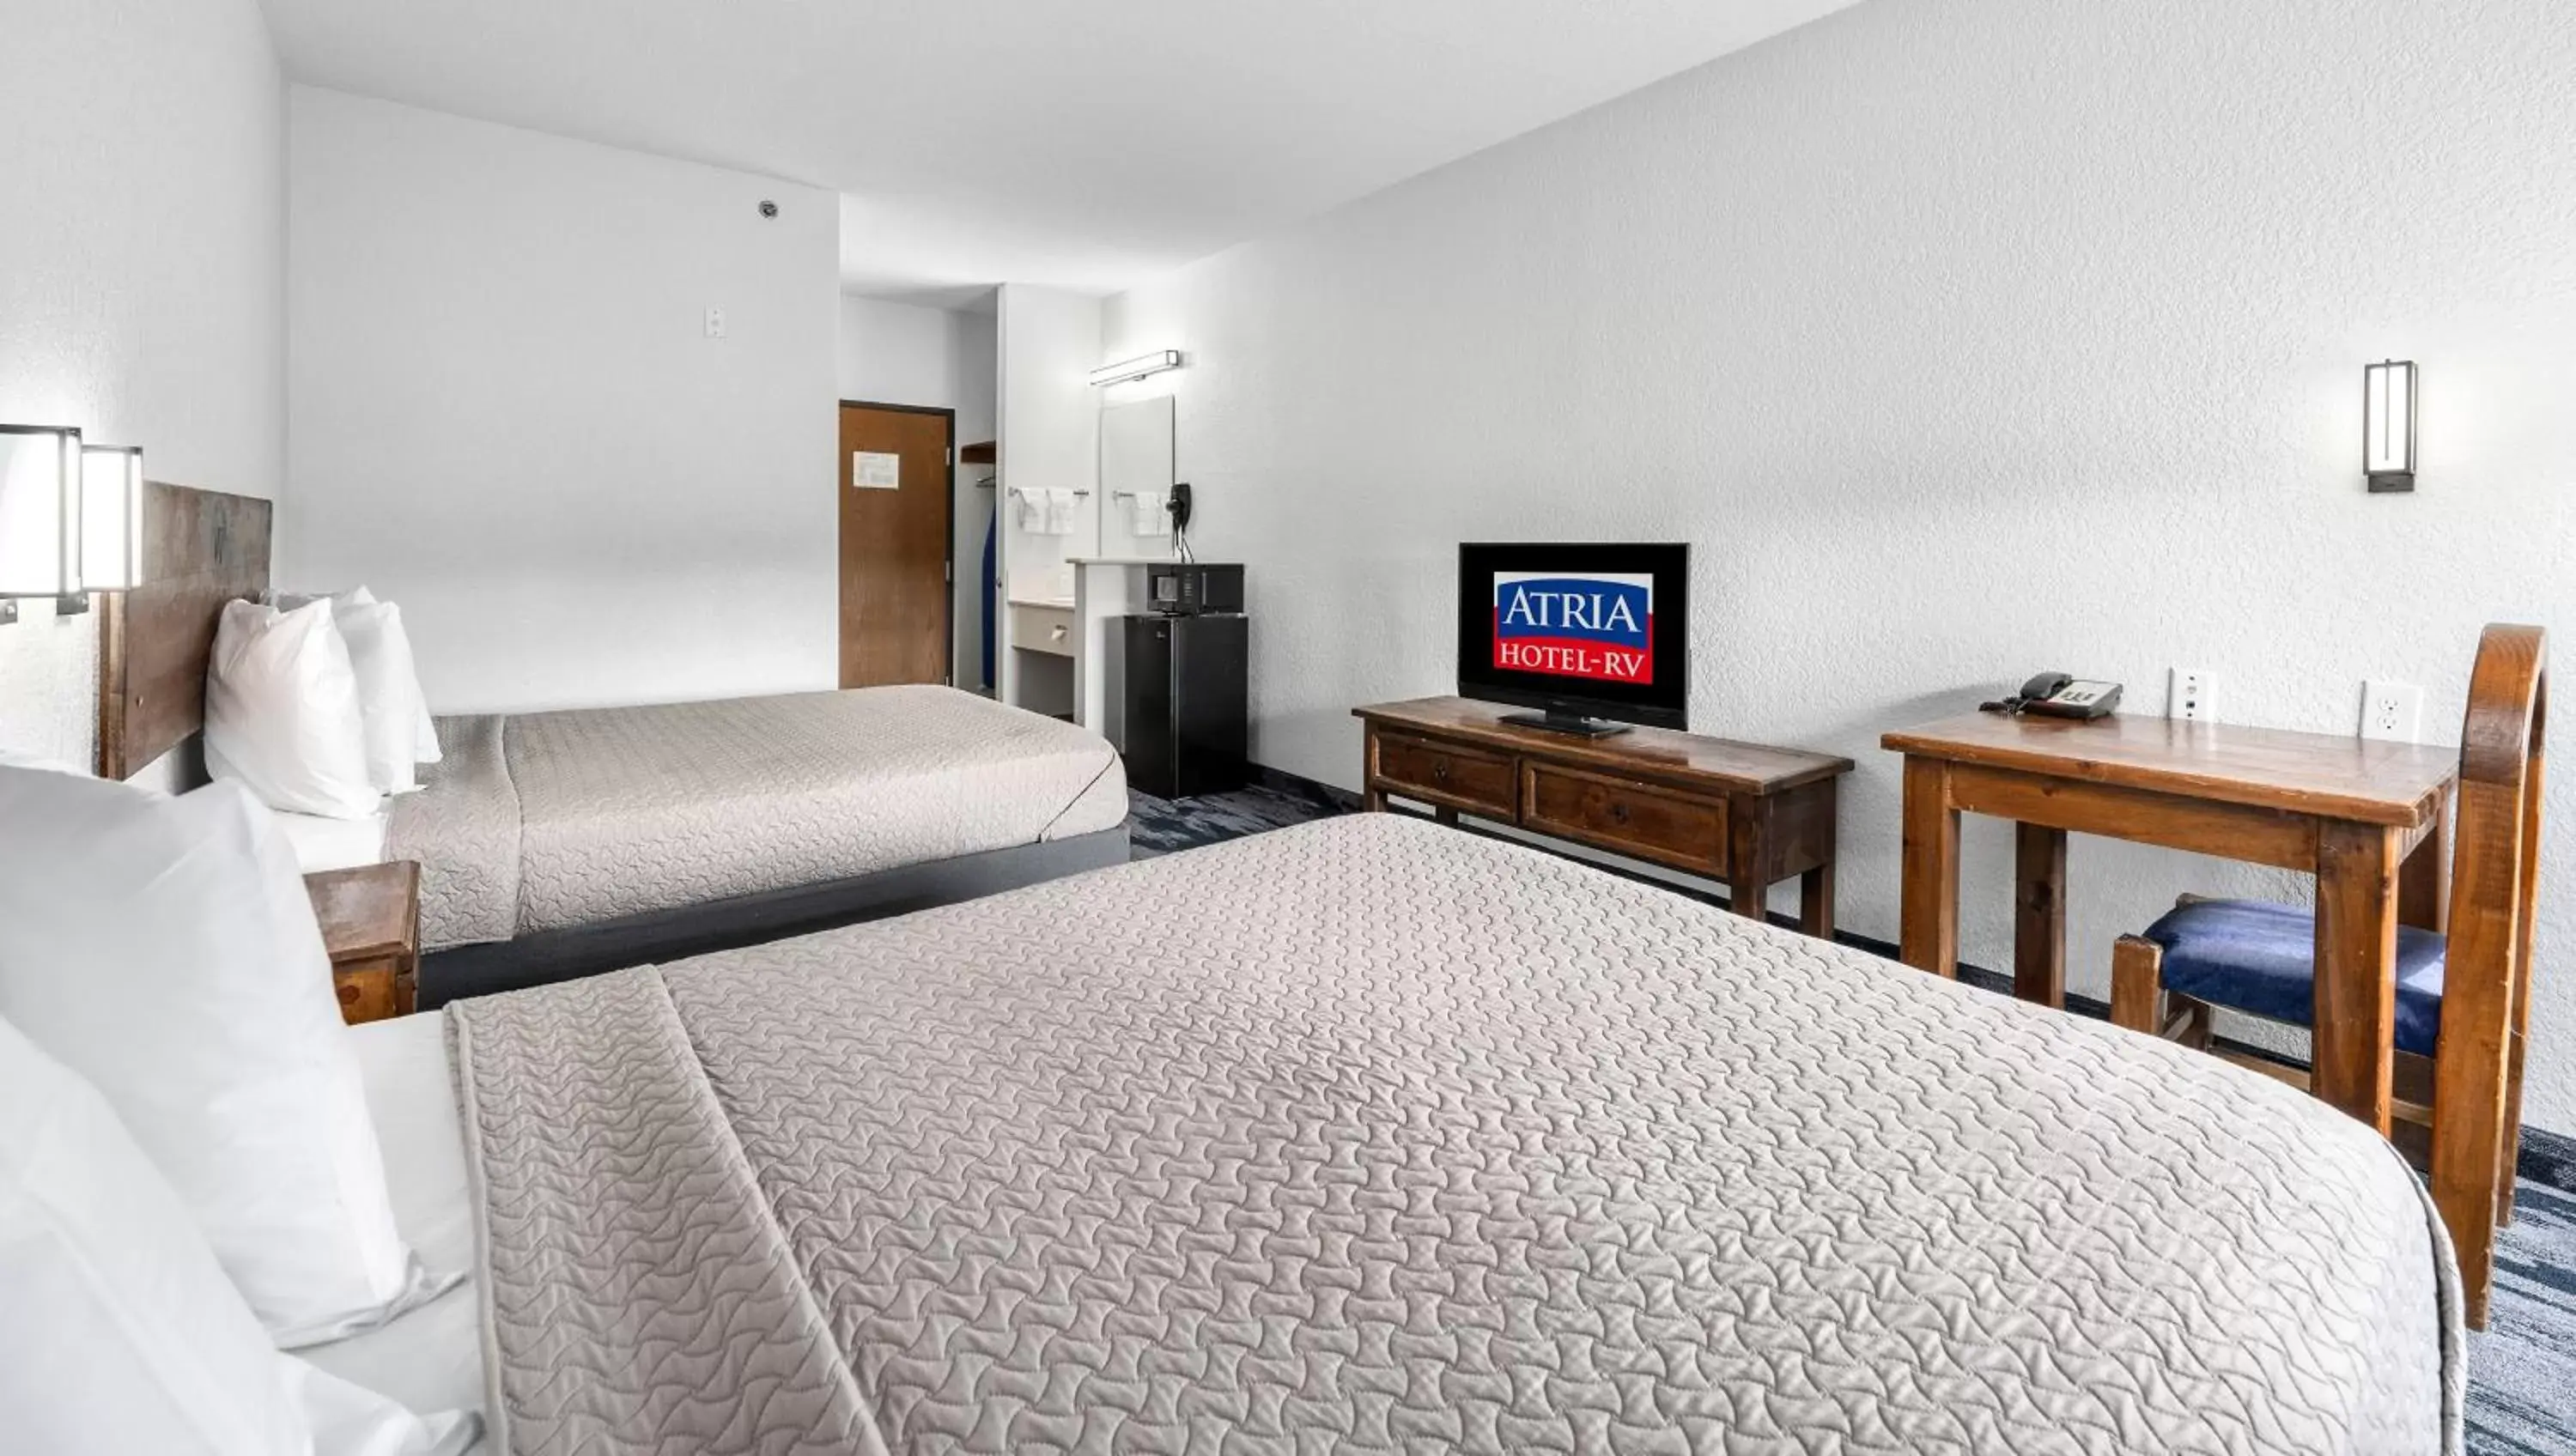 Bedroom, Bed in Atria Hotel and RV McGregor